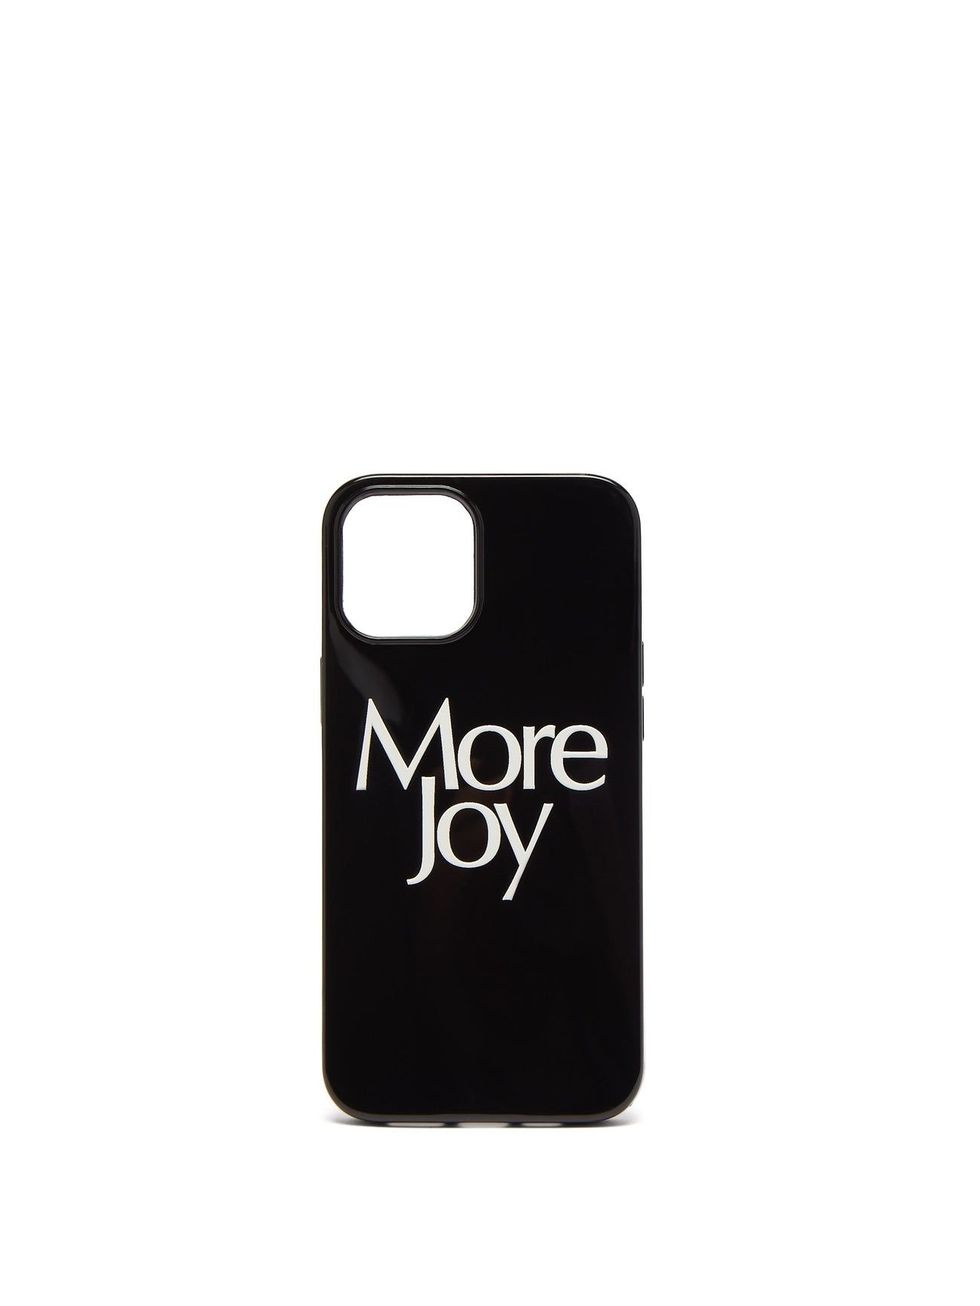 More Joy iPhone® 12 Pro Max phone case